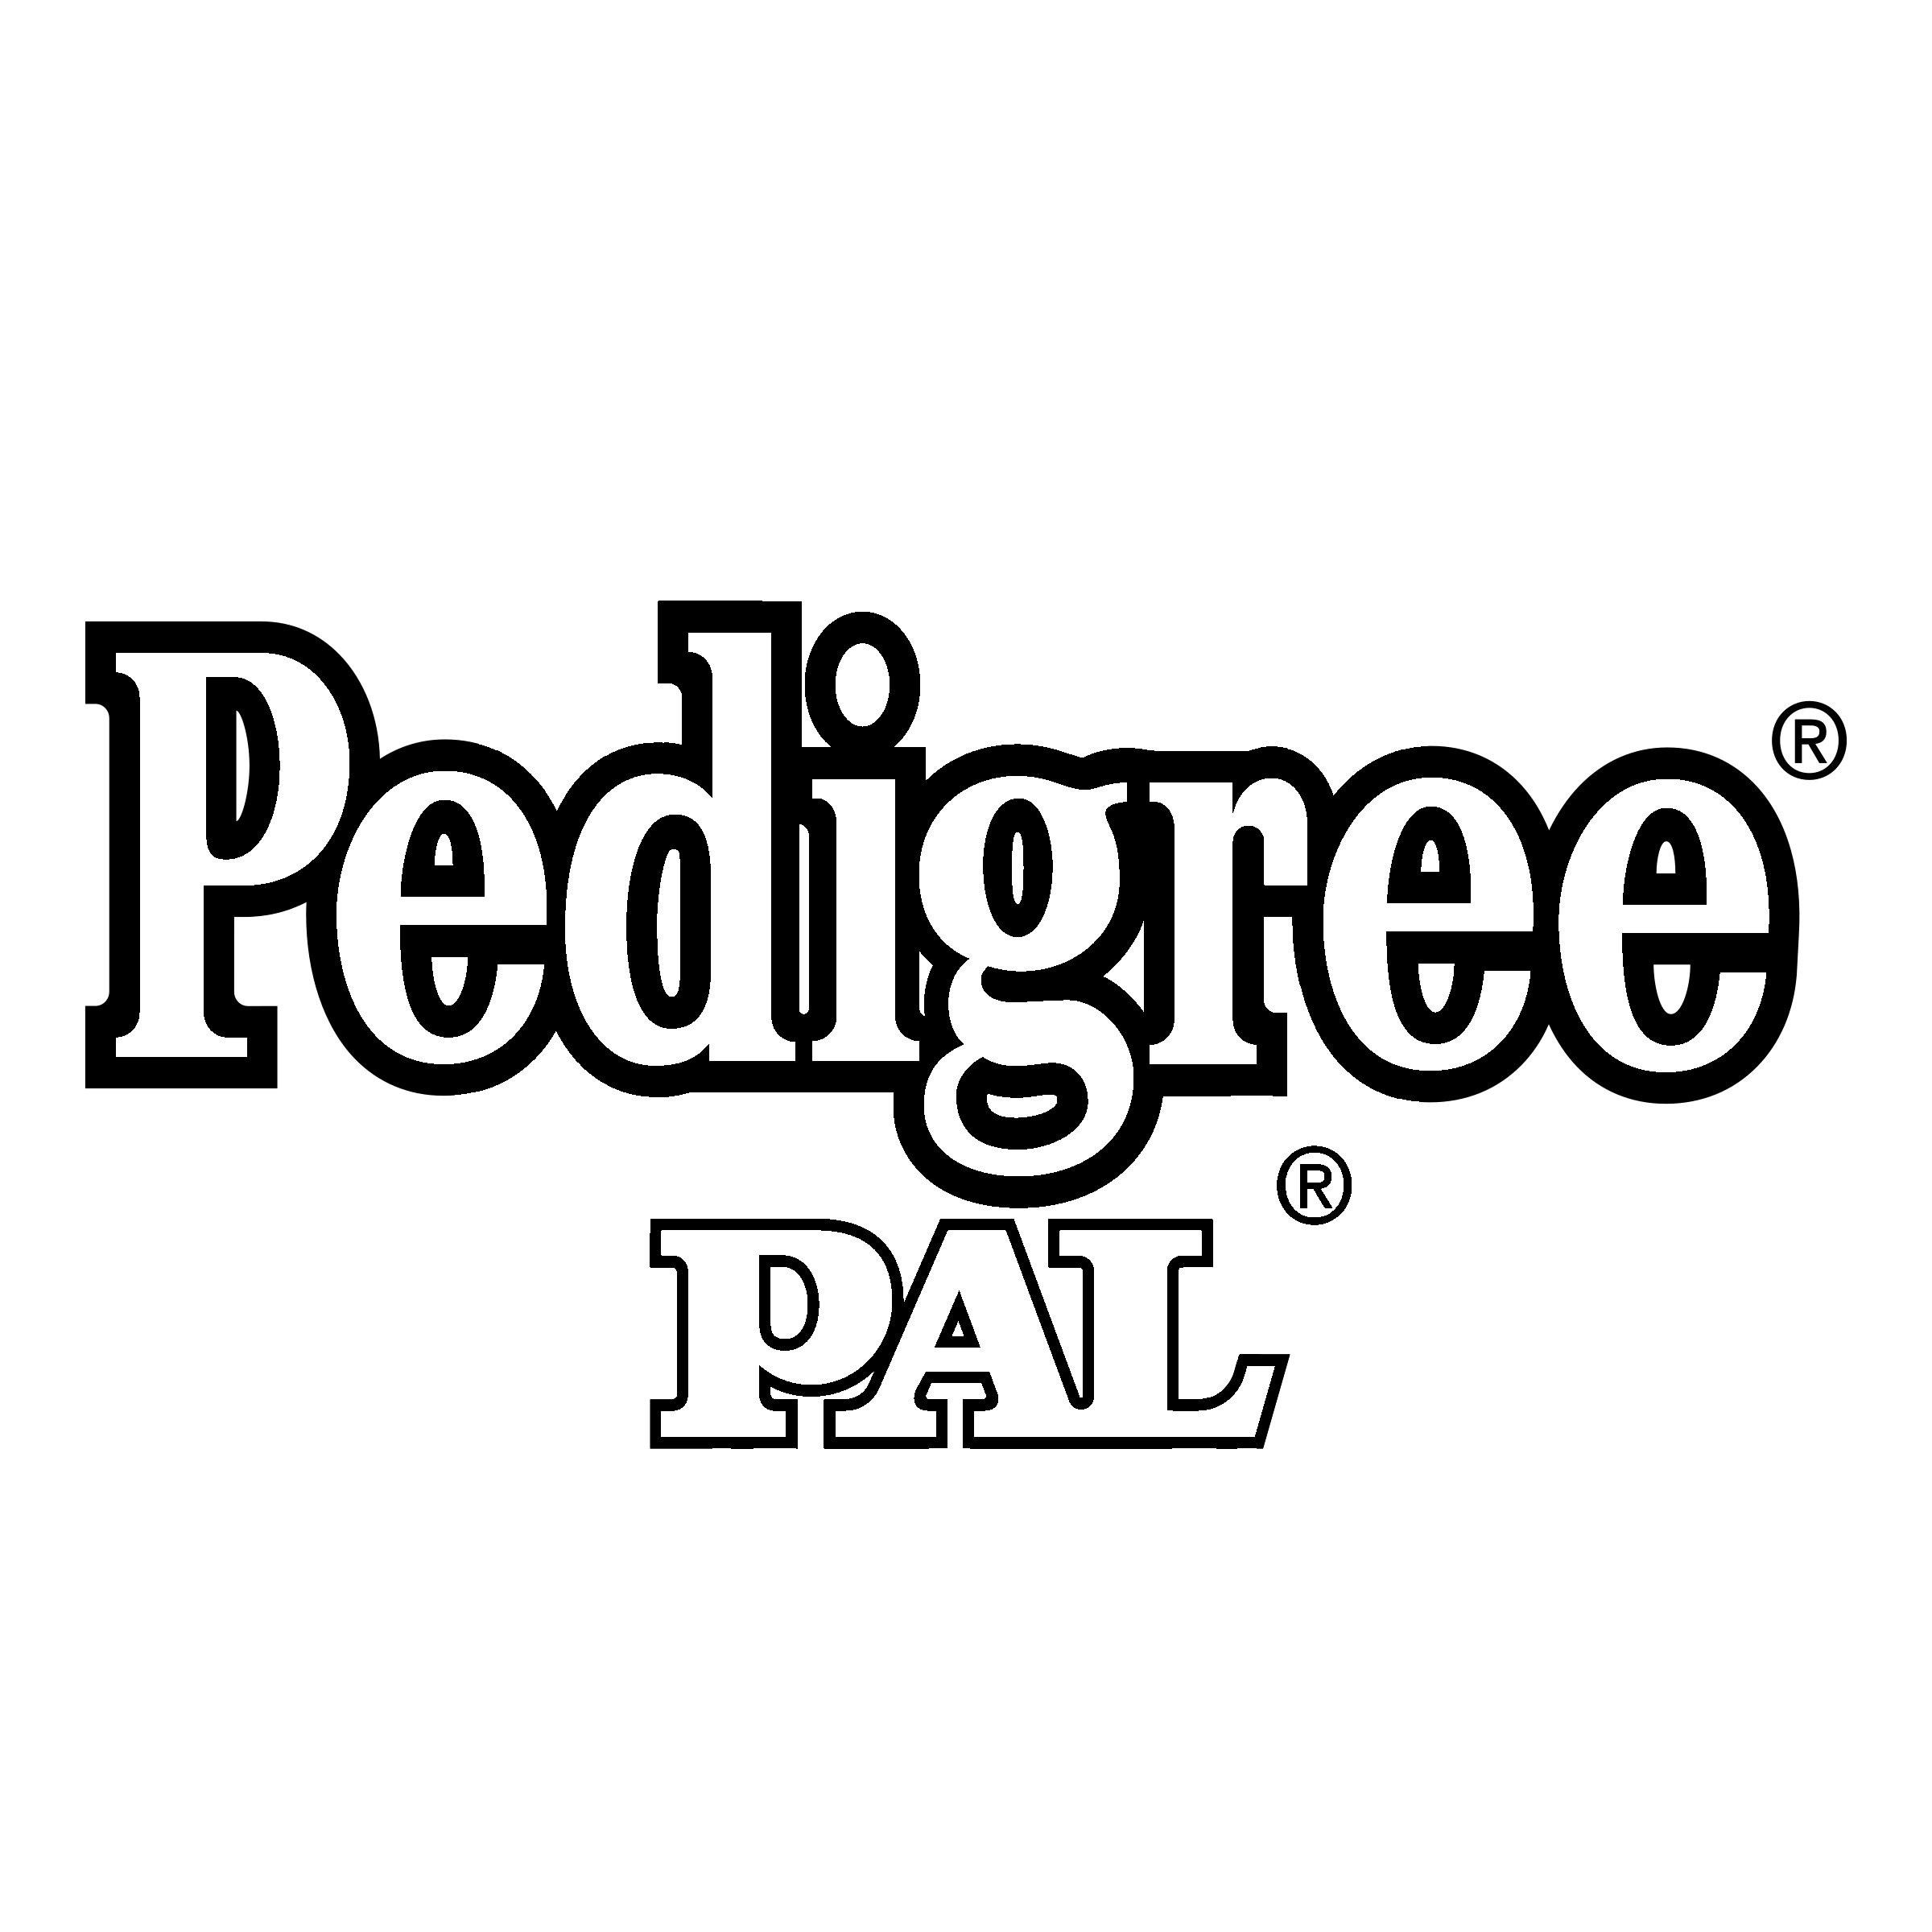 Pedigree Logo - Pedigree Pal Logo PNG Transparent & SVG Vector - Freebie Supply